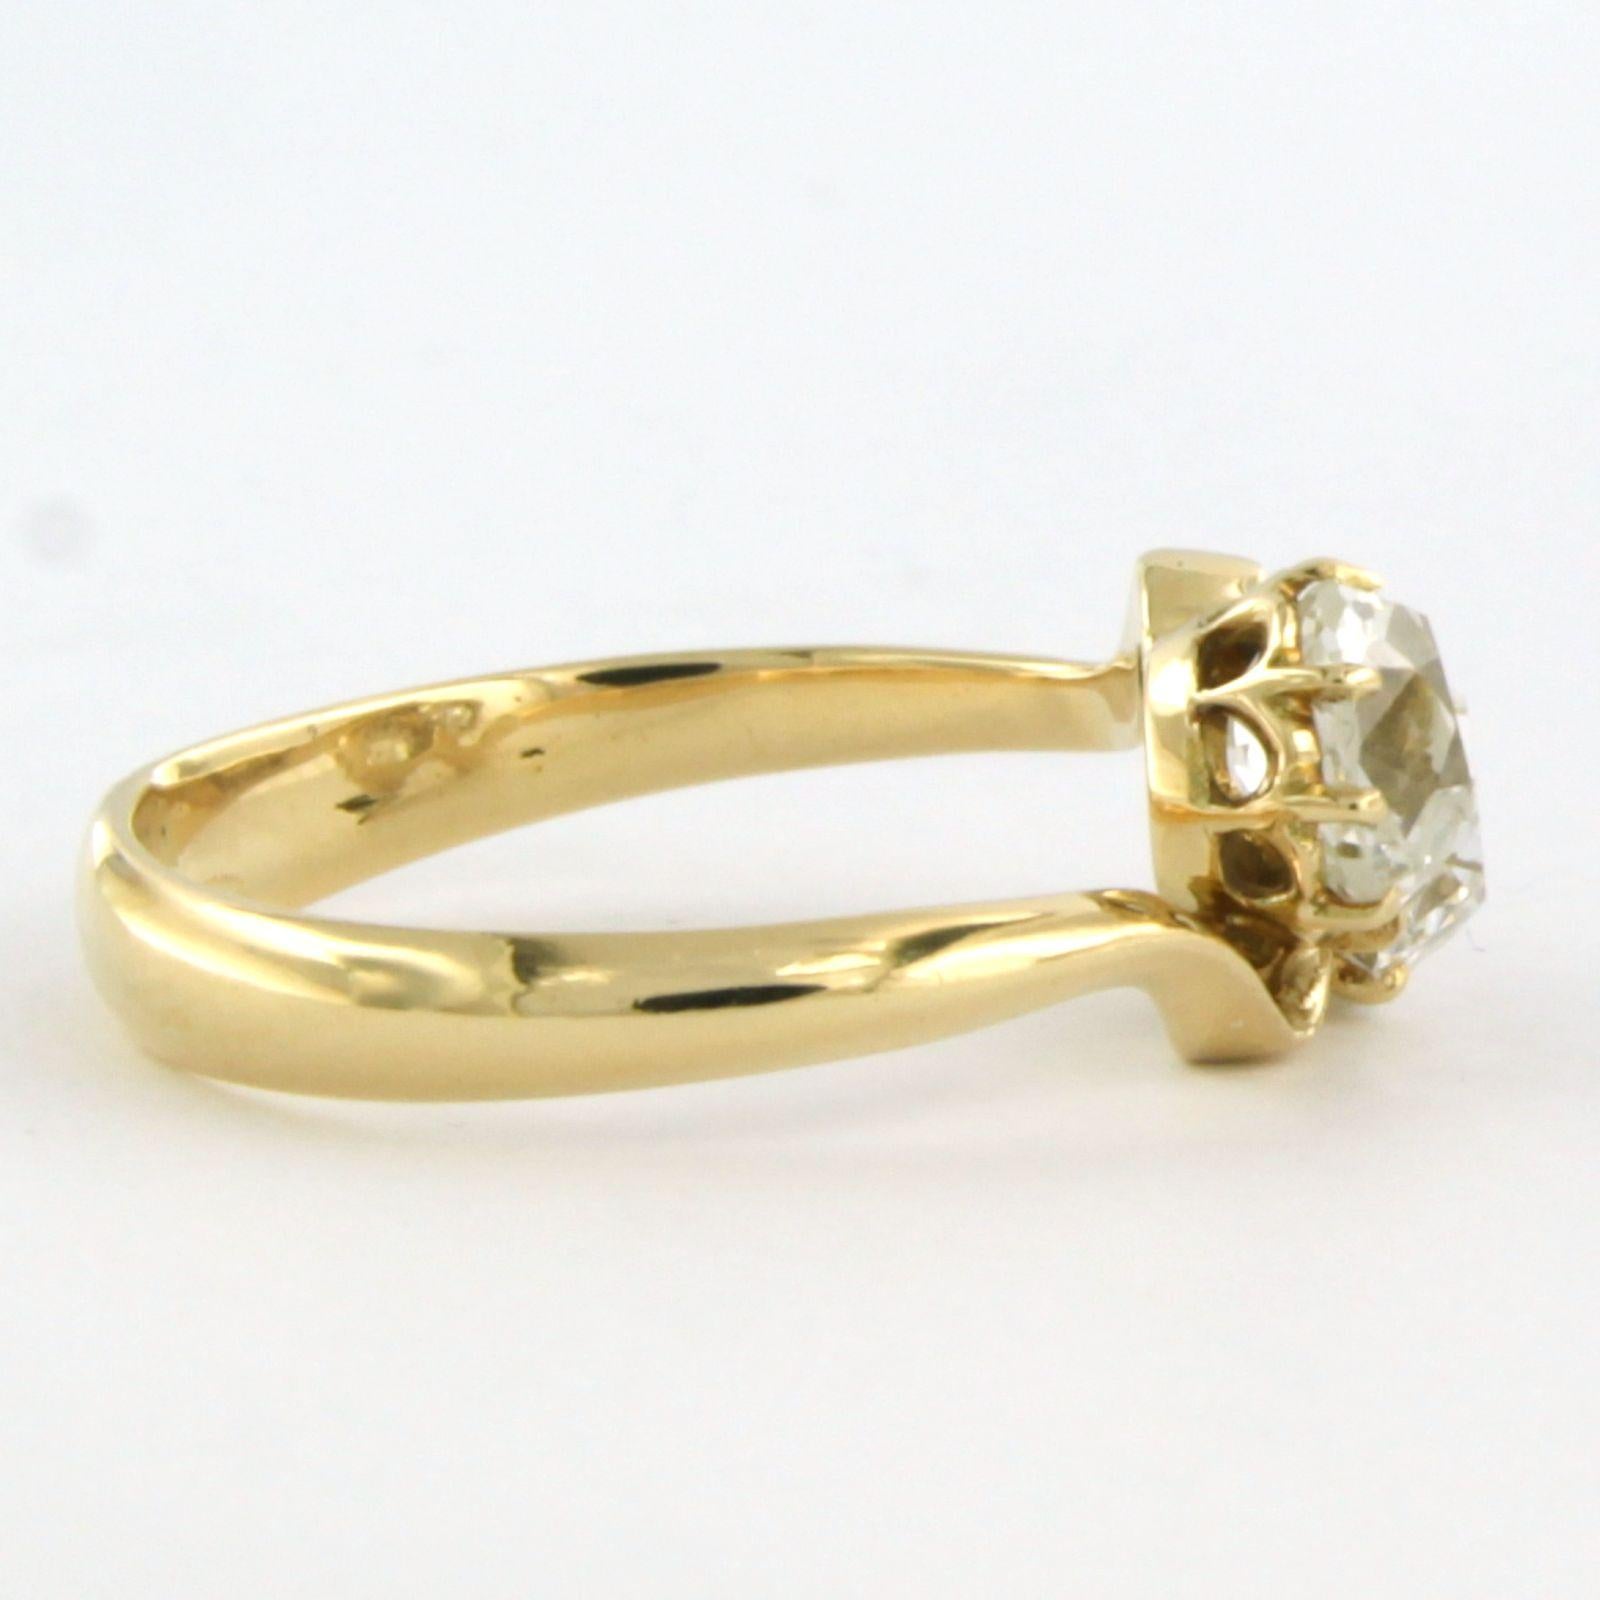 Women's IGI Diamond report - 14k gold ring set with old mine cut diamonds up to 1.59ct